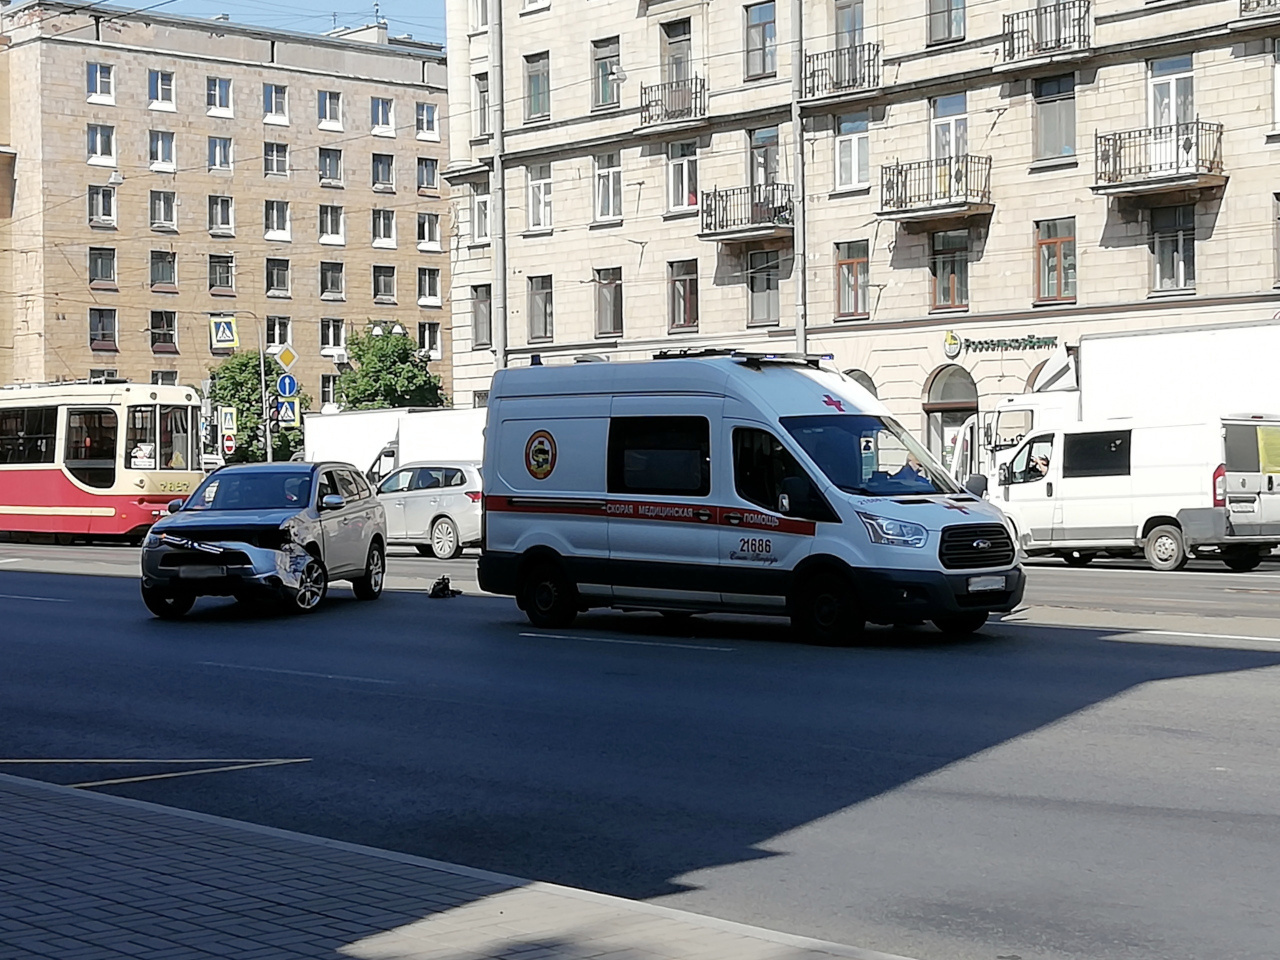 Mitsubishi догнал уходящий трамвай на Заневском. ДТП попало на видео, а водитель — в скорую